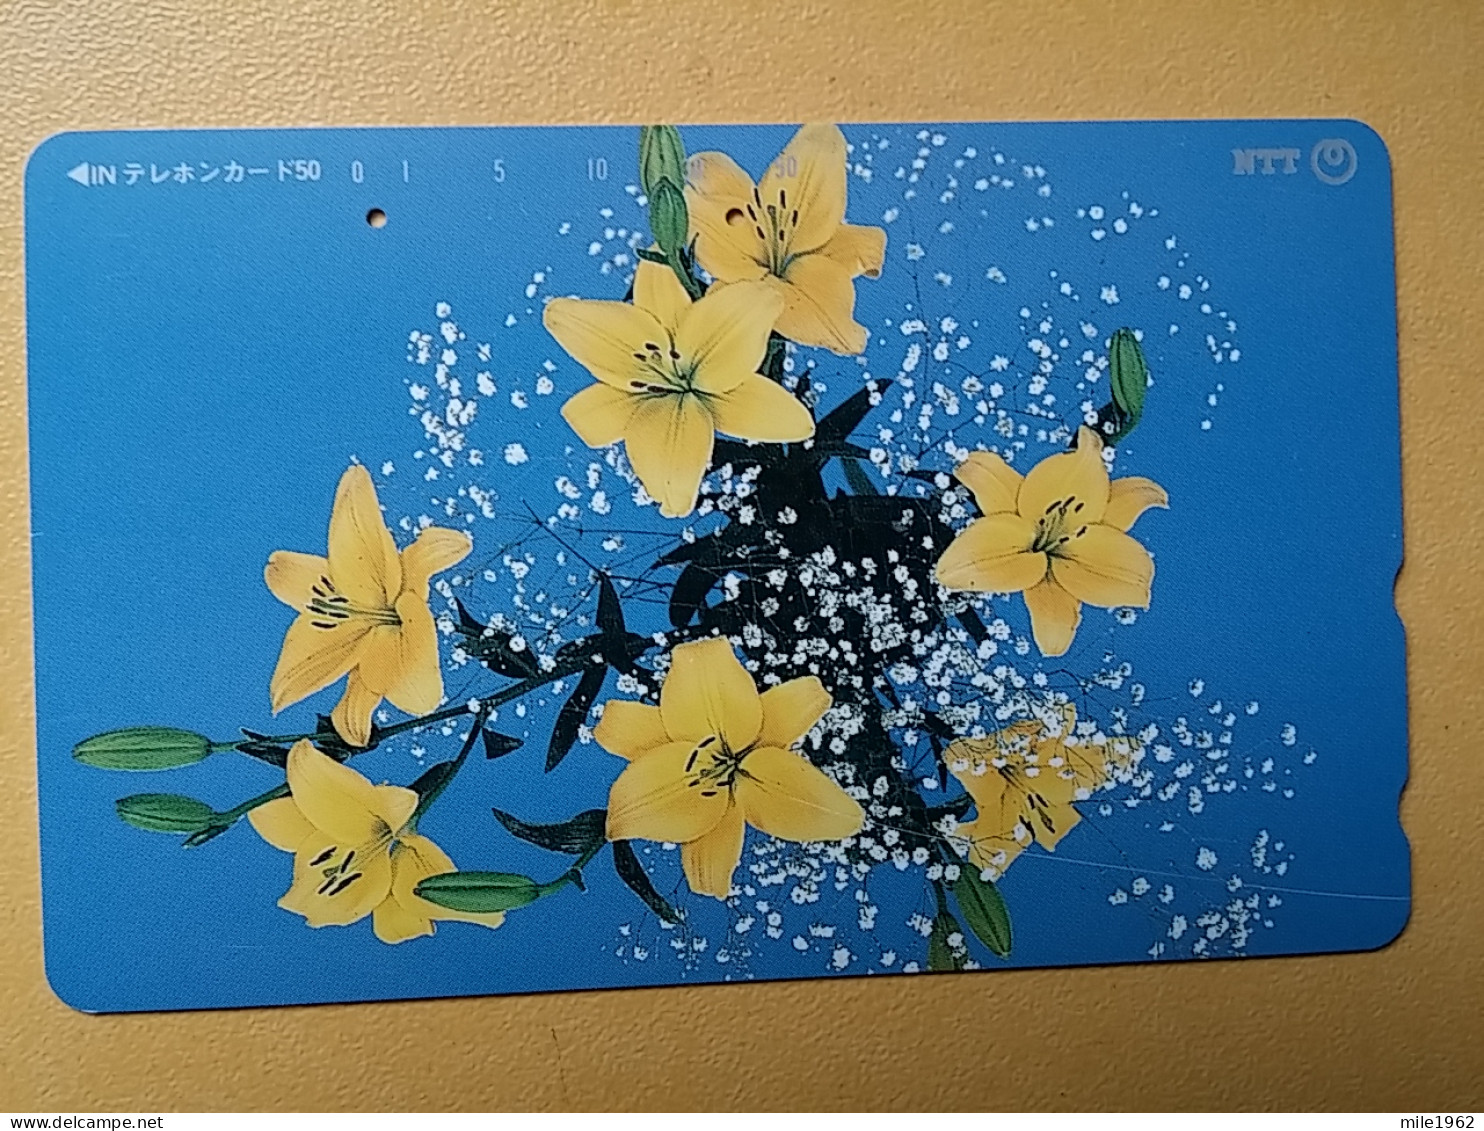 T-384 - JAPAN, Japon, Nipon, TELECARD, PHONECARD, Flower, Fleur, NTT 231-183 - Fleurs